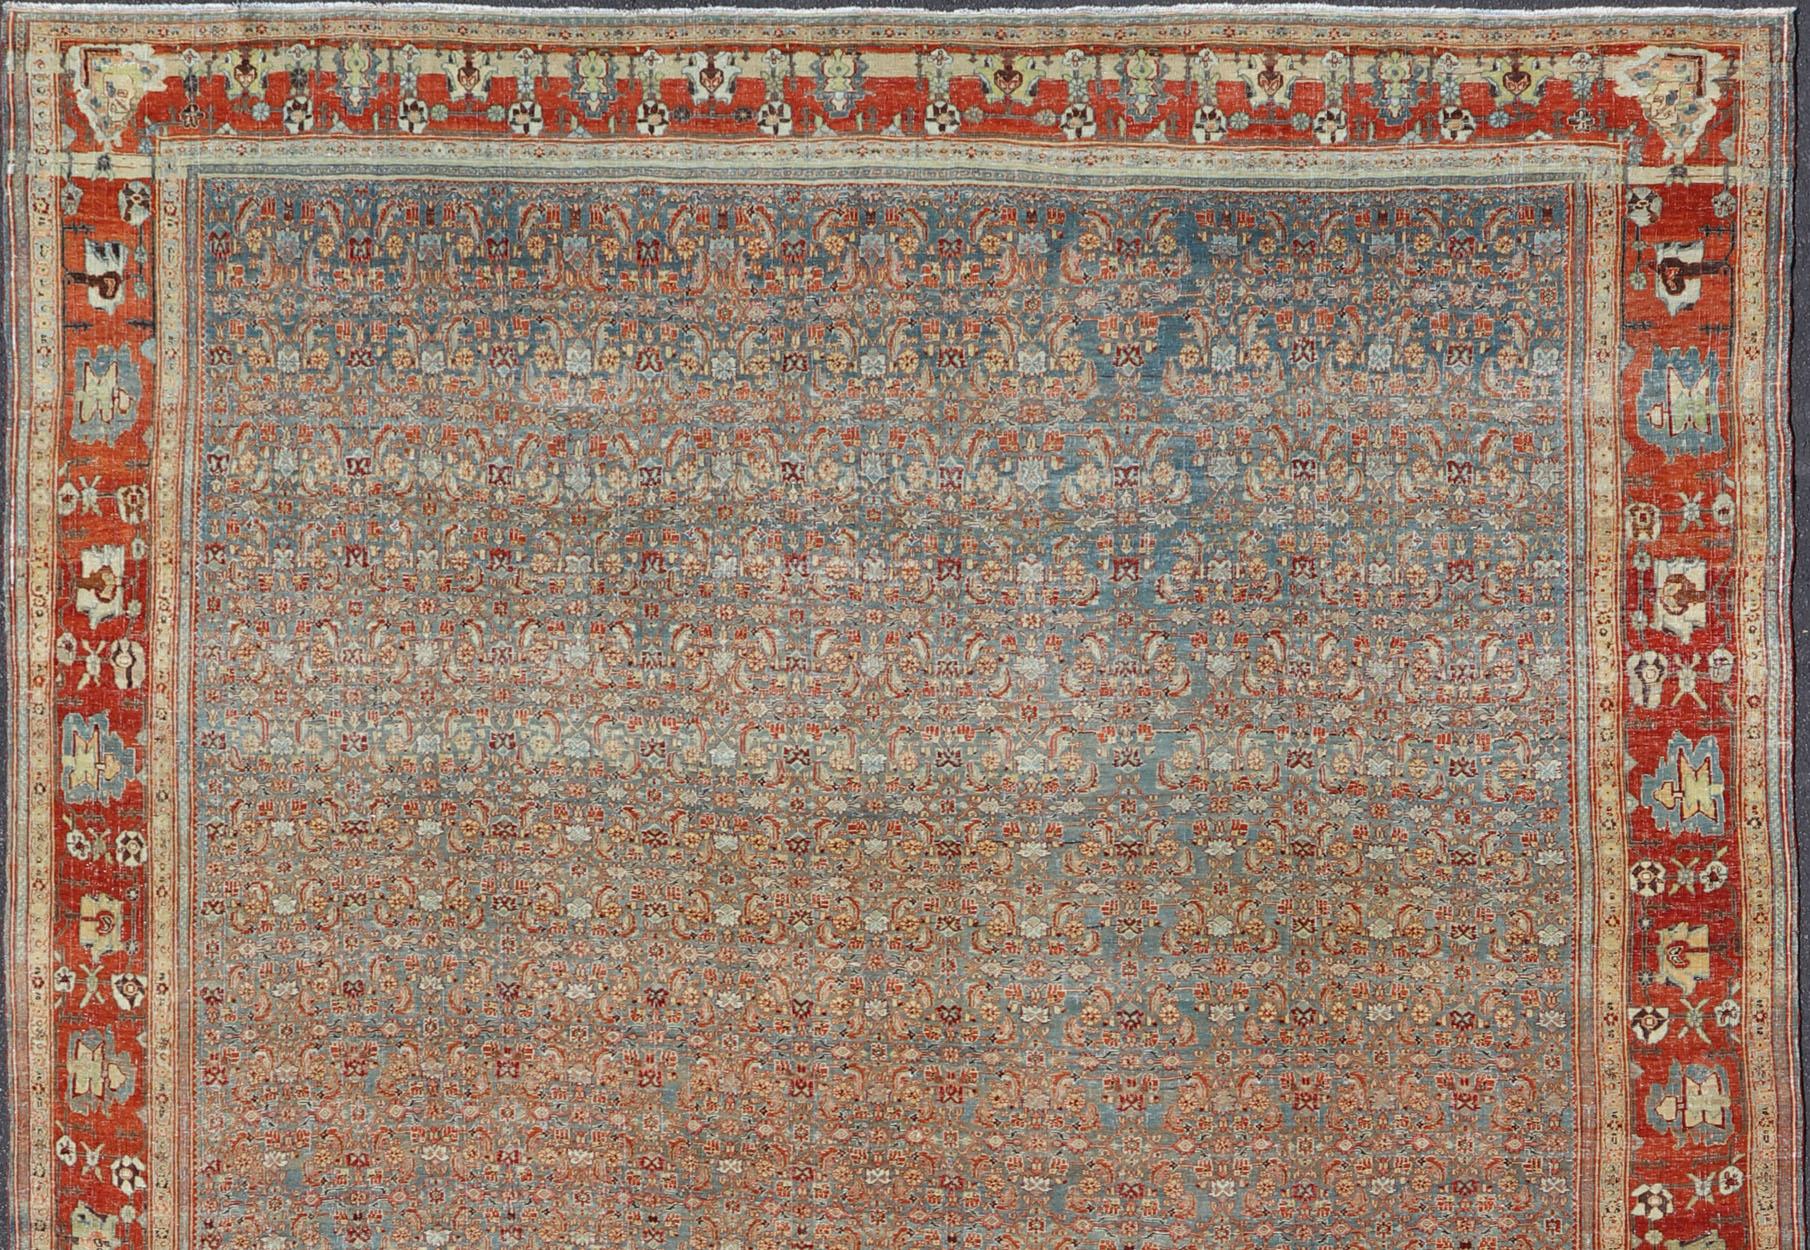 Large Antique Persian Bidjar Rug in All Over Herati Design by Keivan Woven Arts. This Over sized Antique Bidjar Persian rug has variety of colors, rug R20-0903-178549, country of origin / type: Iran / Bidjar, circa 1890

Measures:12'10 x 19'3 

This